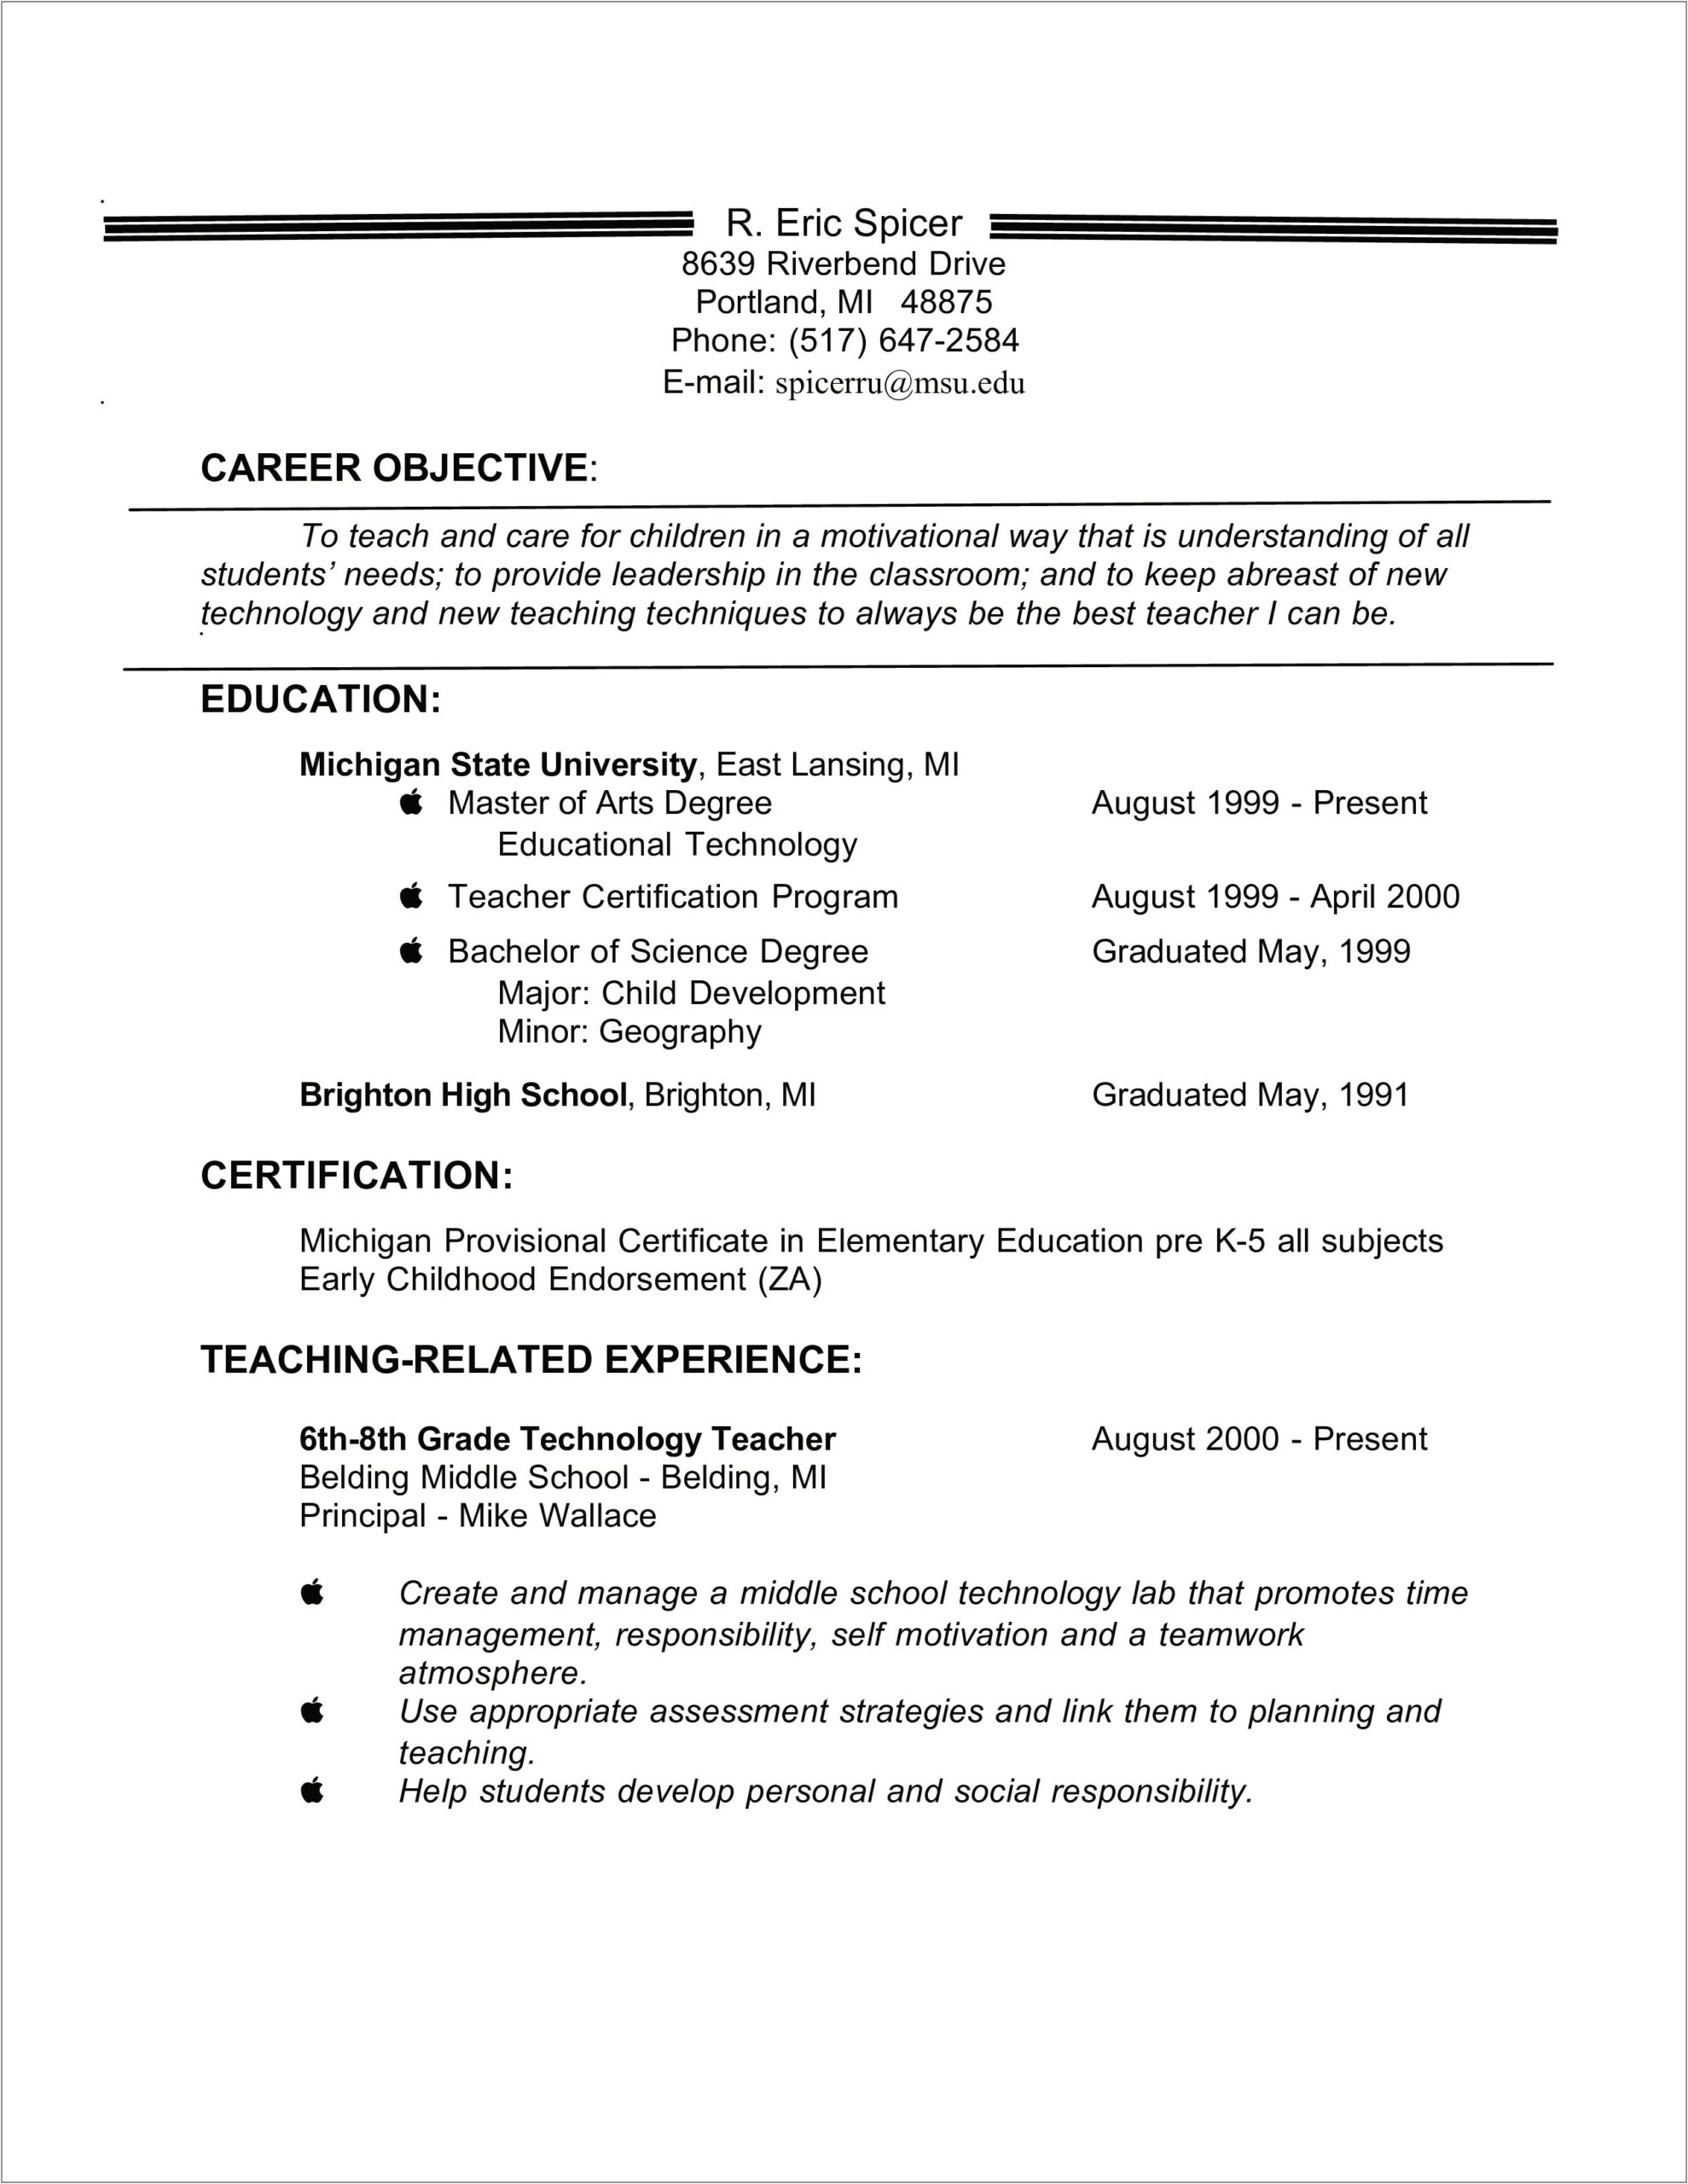 Resume Objective Applying To Graduate School